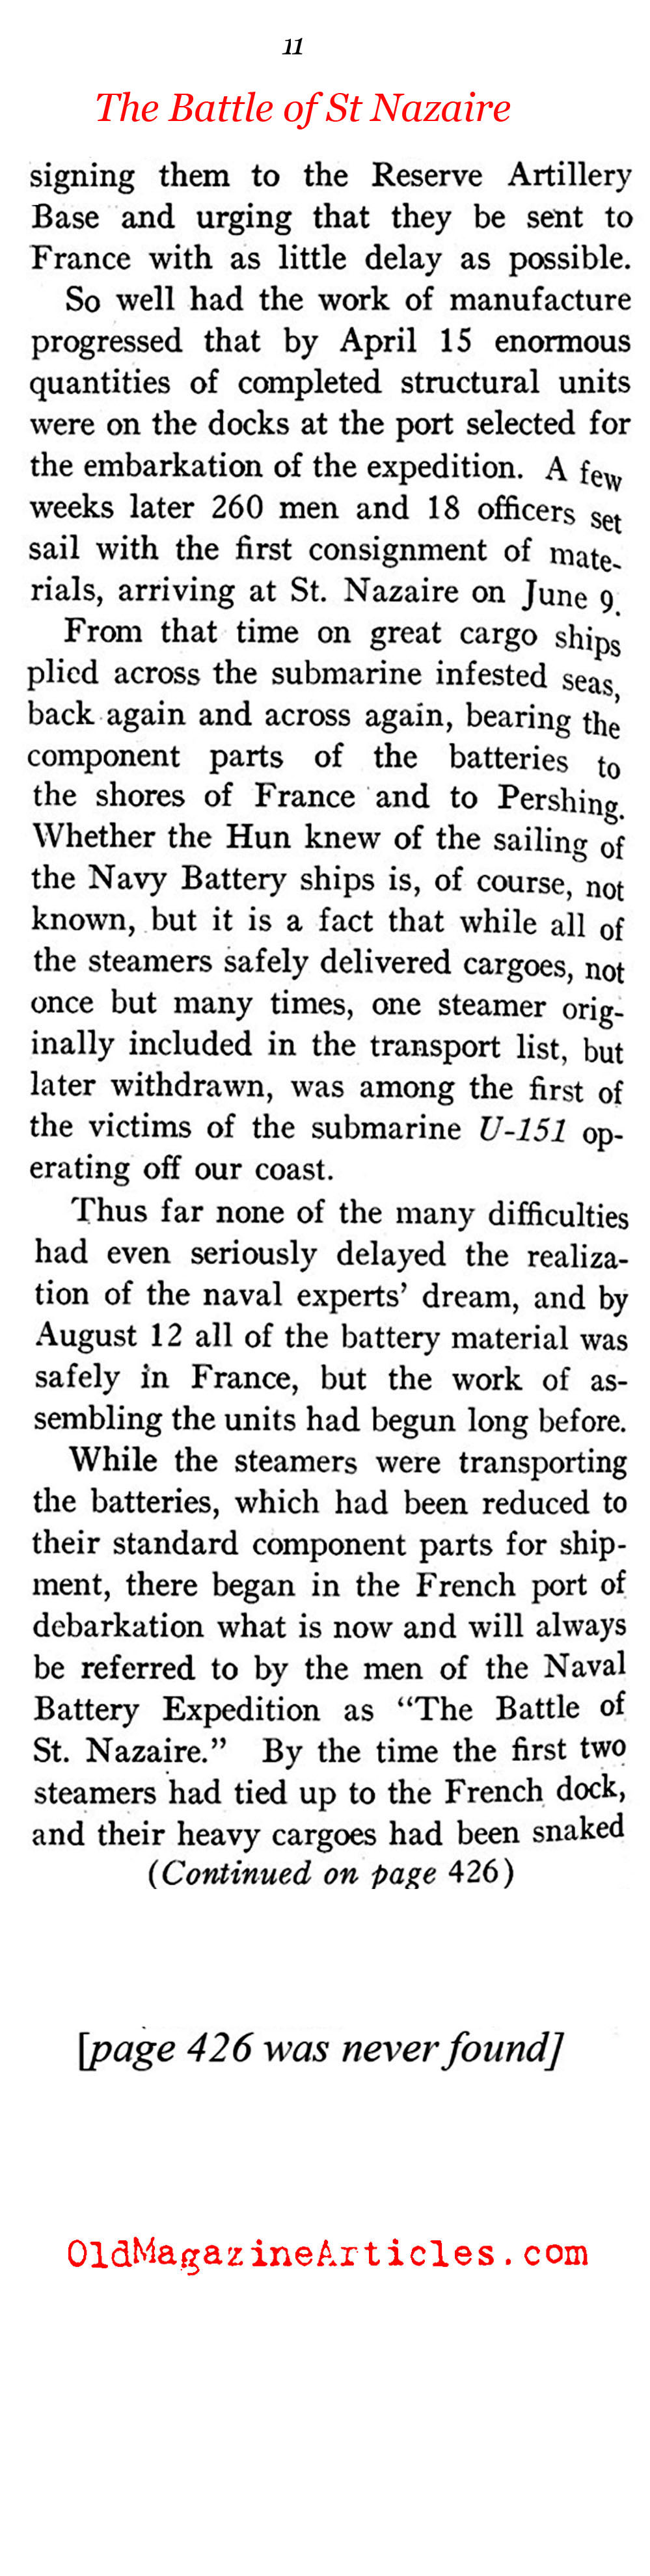 Firing from the Rails (Sea Power Magazine, 1918)